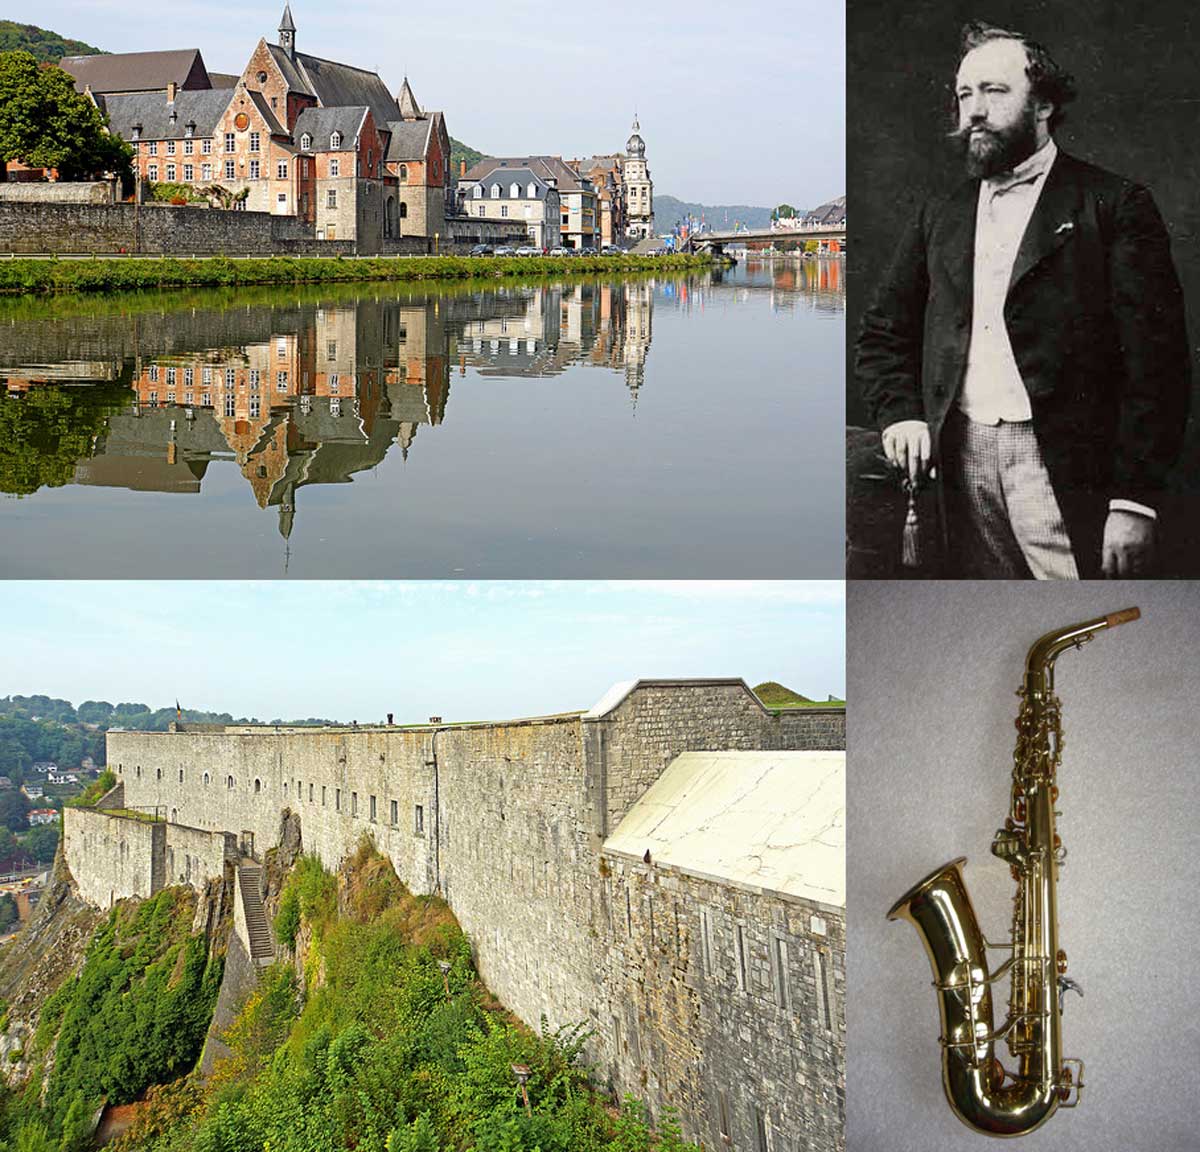 Fakta: Adolphe Sax, der opfandt saxofonen, kom fra byen Dinant i Belgien.